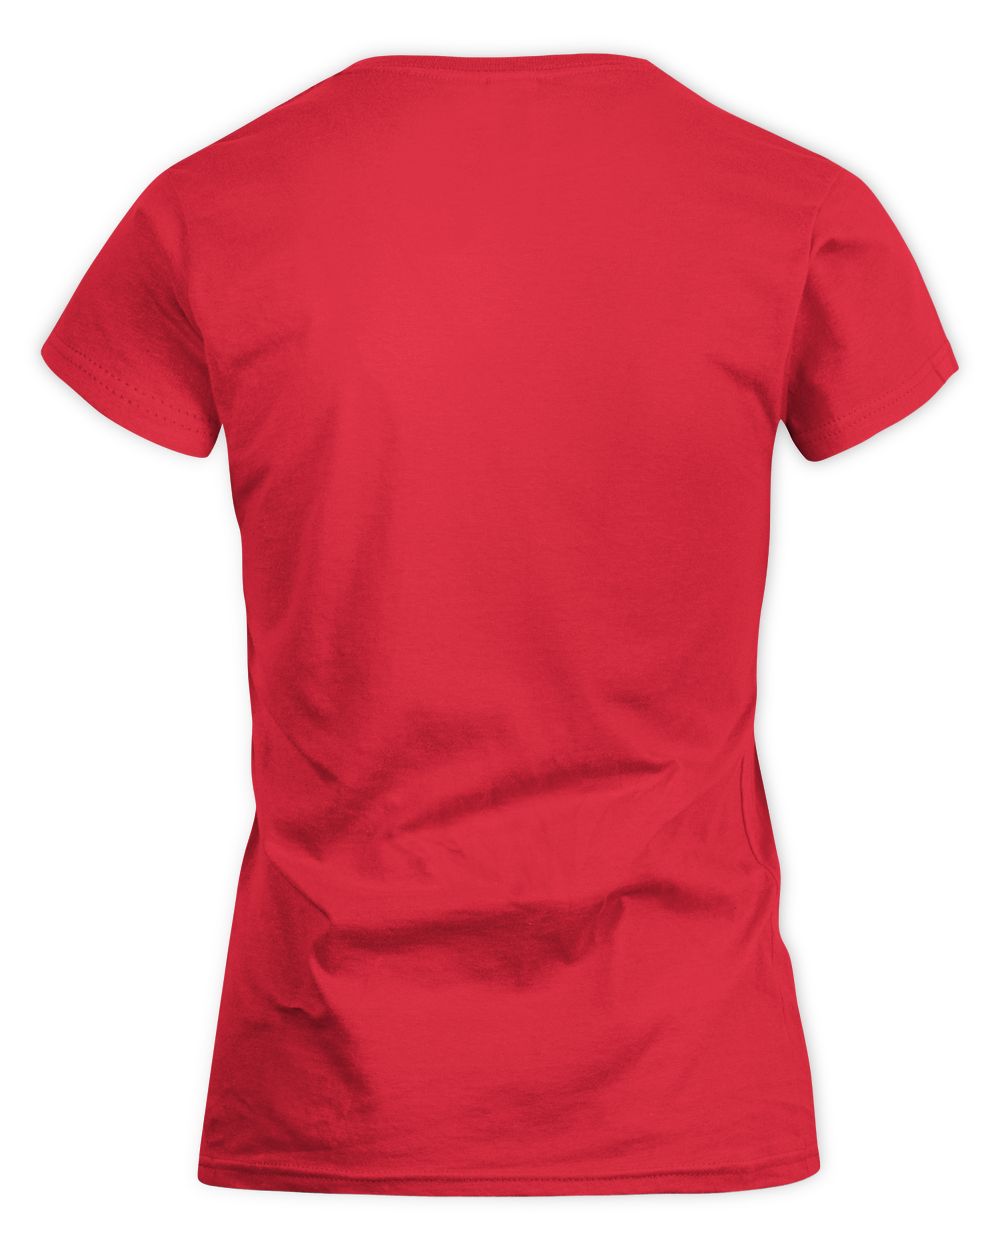 Criminal Minds Merch Bau Logo Classic Shirt Women's Soft Style Fitted T-Shirt red 